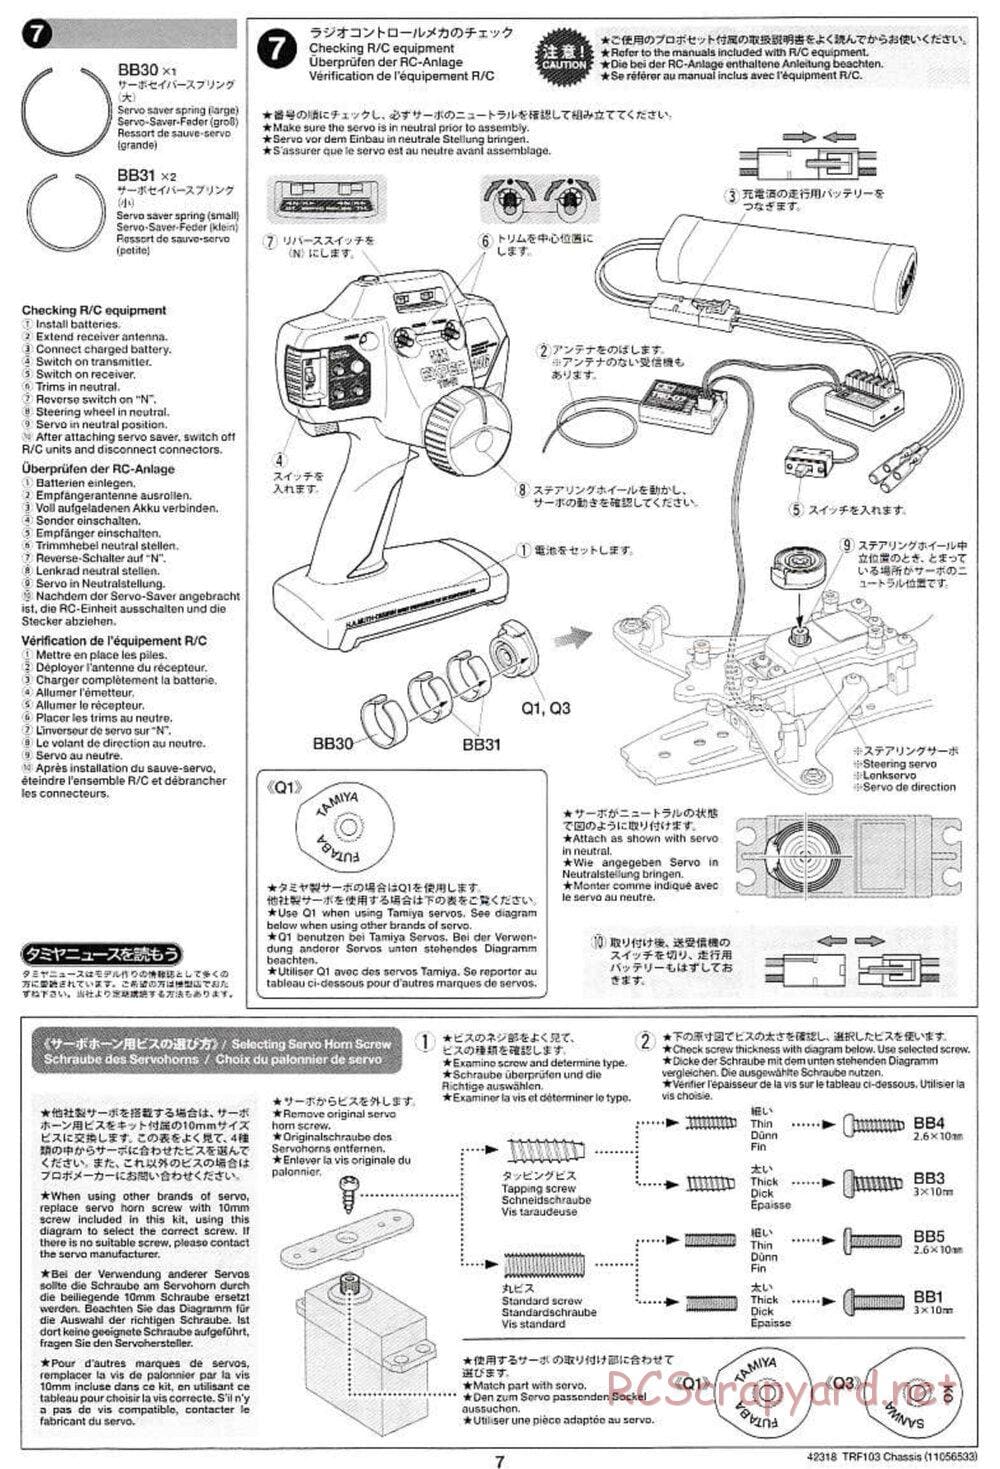 Tamiya - TRF103 Chassis - Manual - Page 7